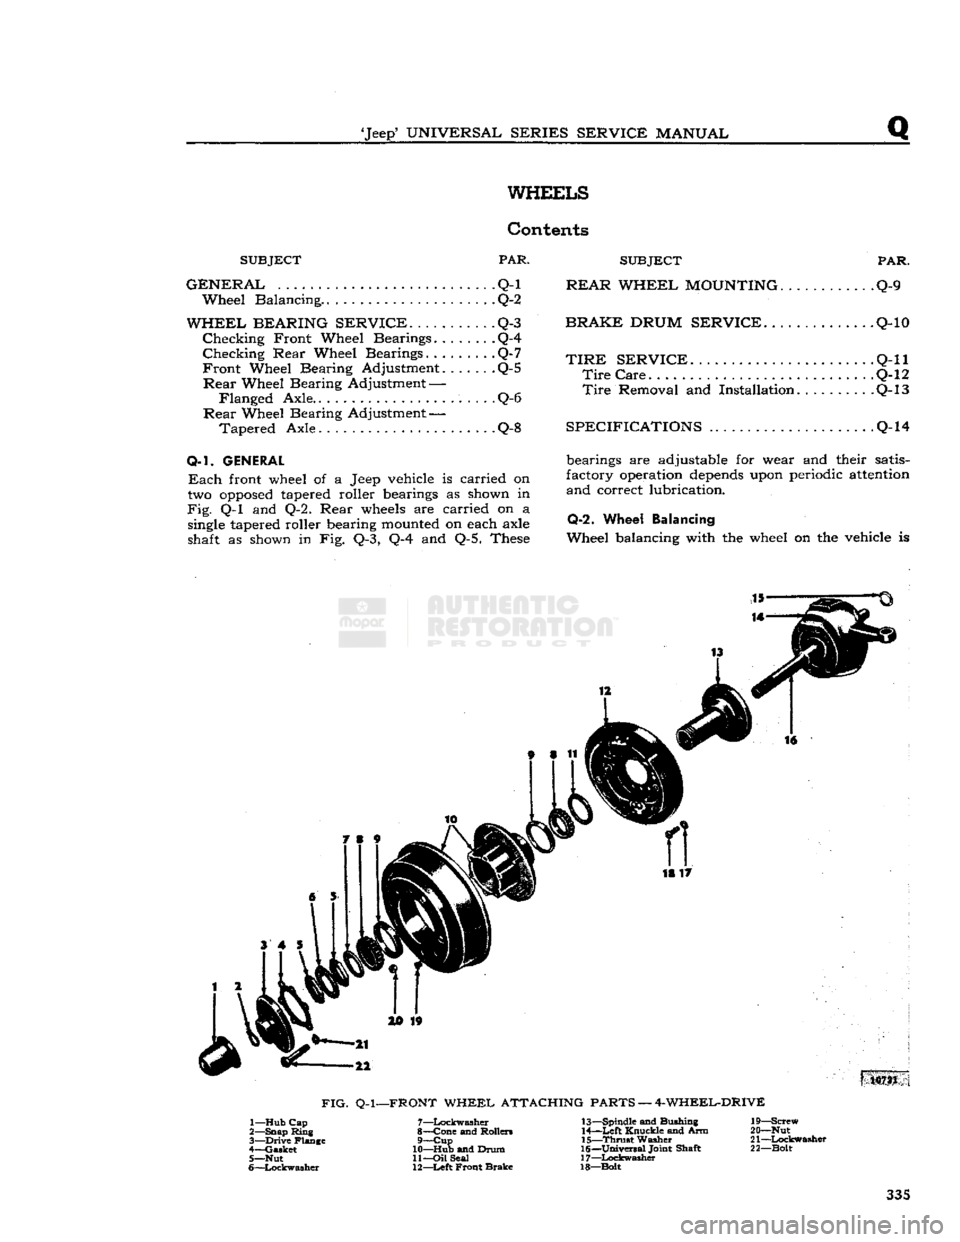 JEEP CJ 1953 Owners Manual 
Jeep
 UNIVERSAL
 SERIES SERVICE
 MANUAL 

WHEELS 

Contents 

SUBJECT PAR. 

GENERAL
 Q-l  Wheel Balancing. Q-2 

WHEEL BEARING SERVICE.
 ......
 Q-3 
 Checking
 Front Wheel Bearings Q-4 

Checking